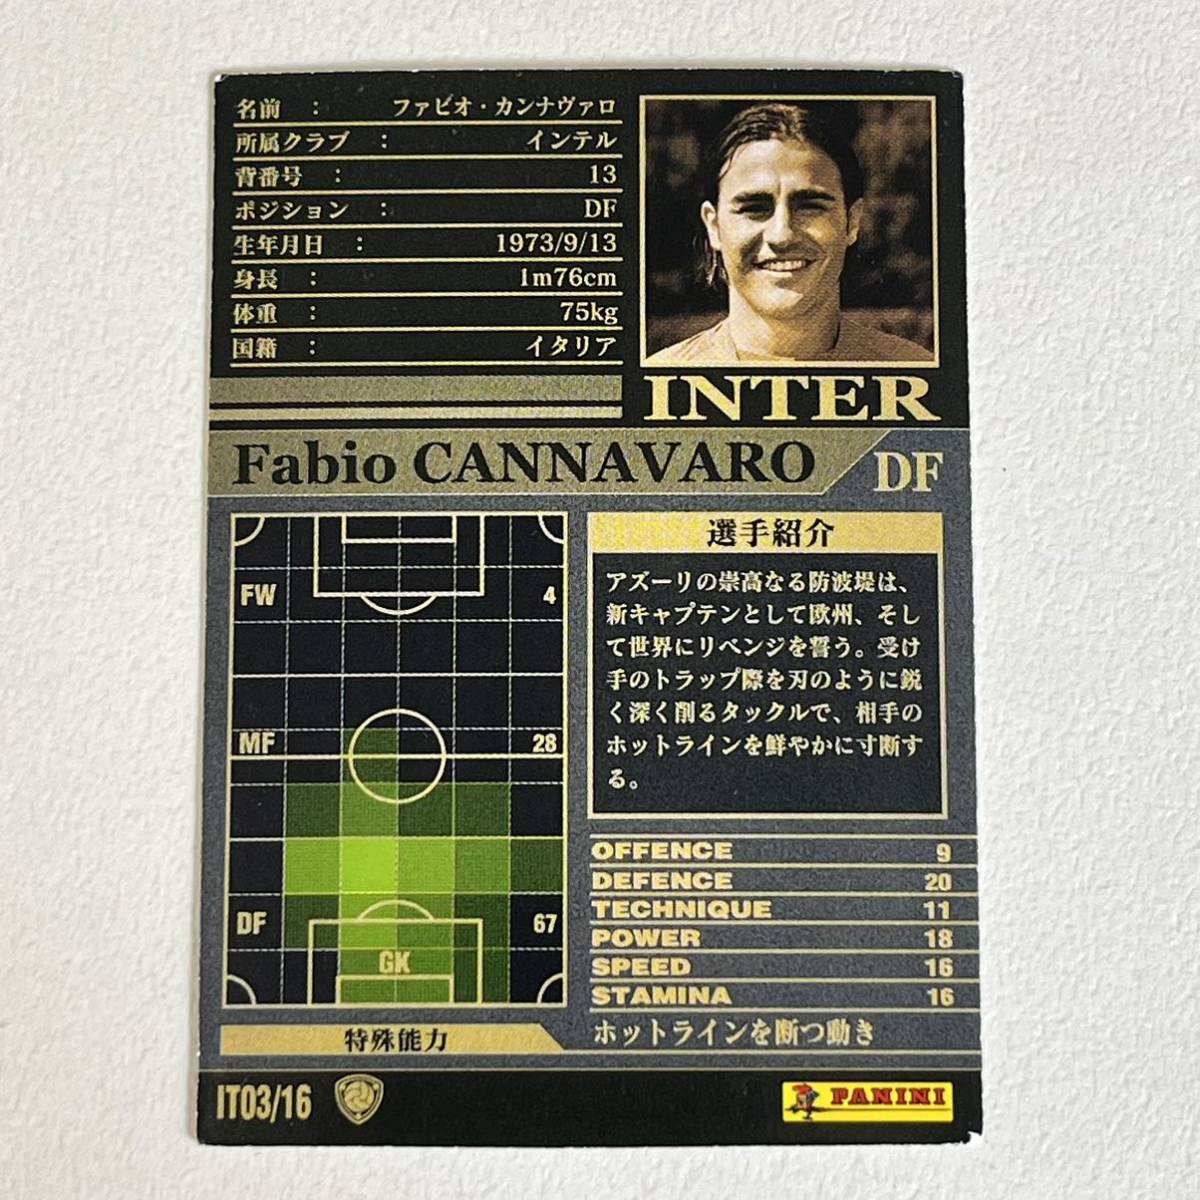 ♪♪WCCF 02-03 IT ファビオ・カンナヴァロ Fabio Cannavaro Internazionale ♪三点落札で普通郵便送料無料♪_画像2